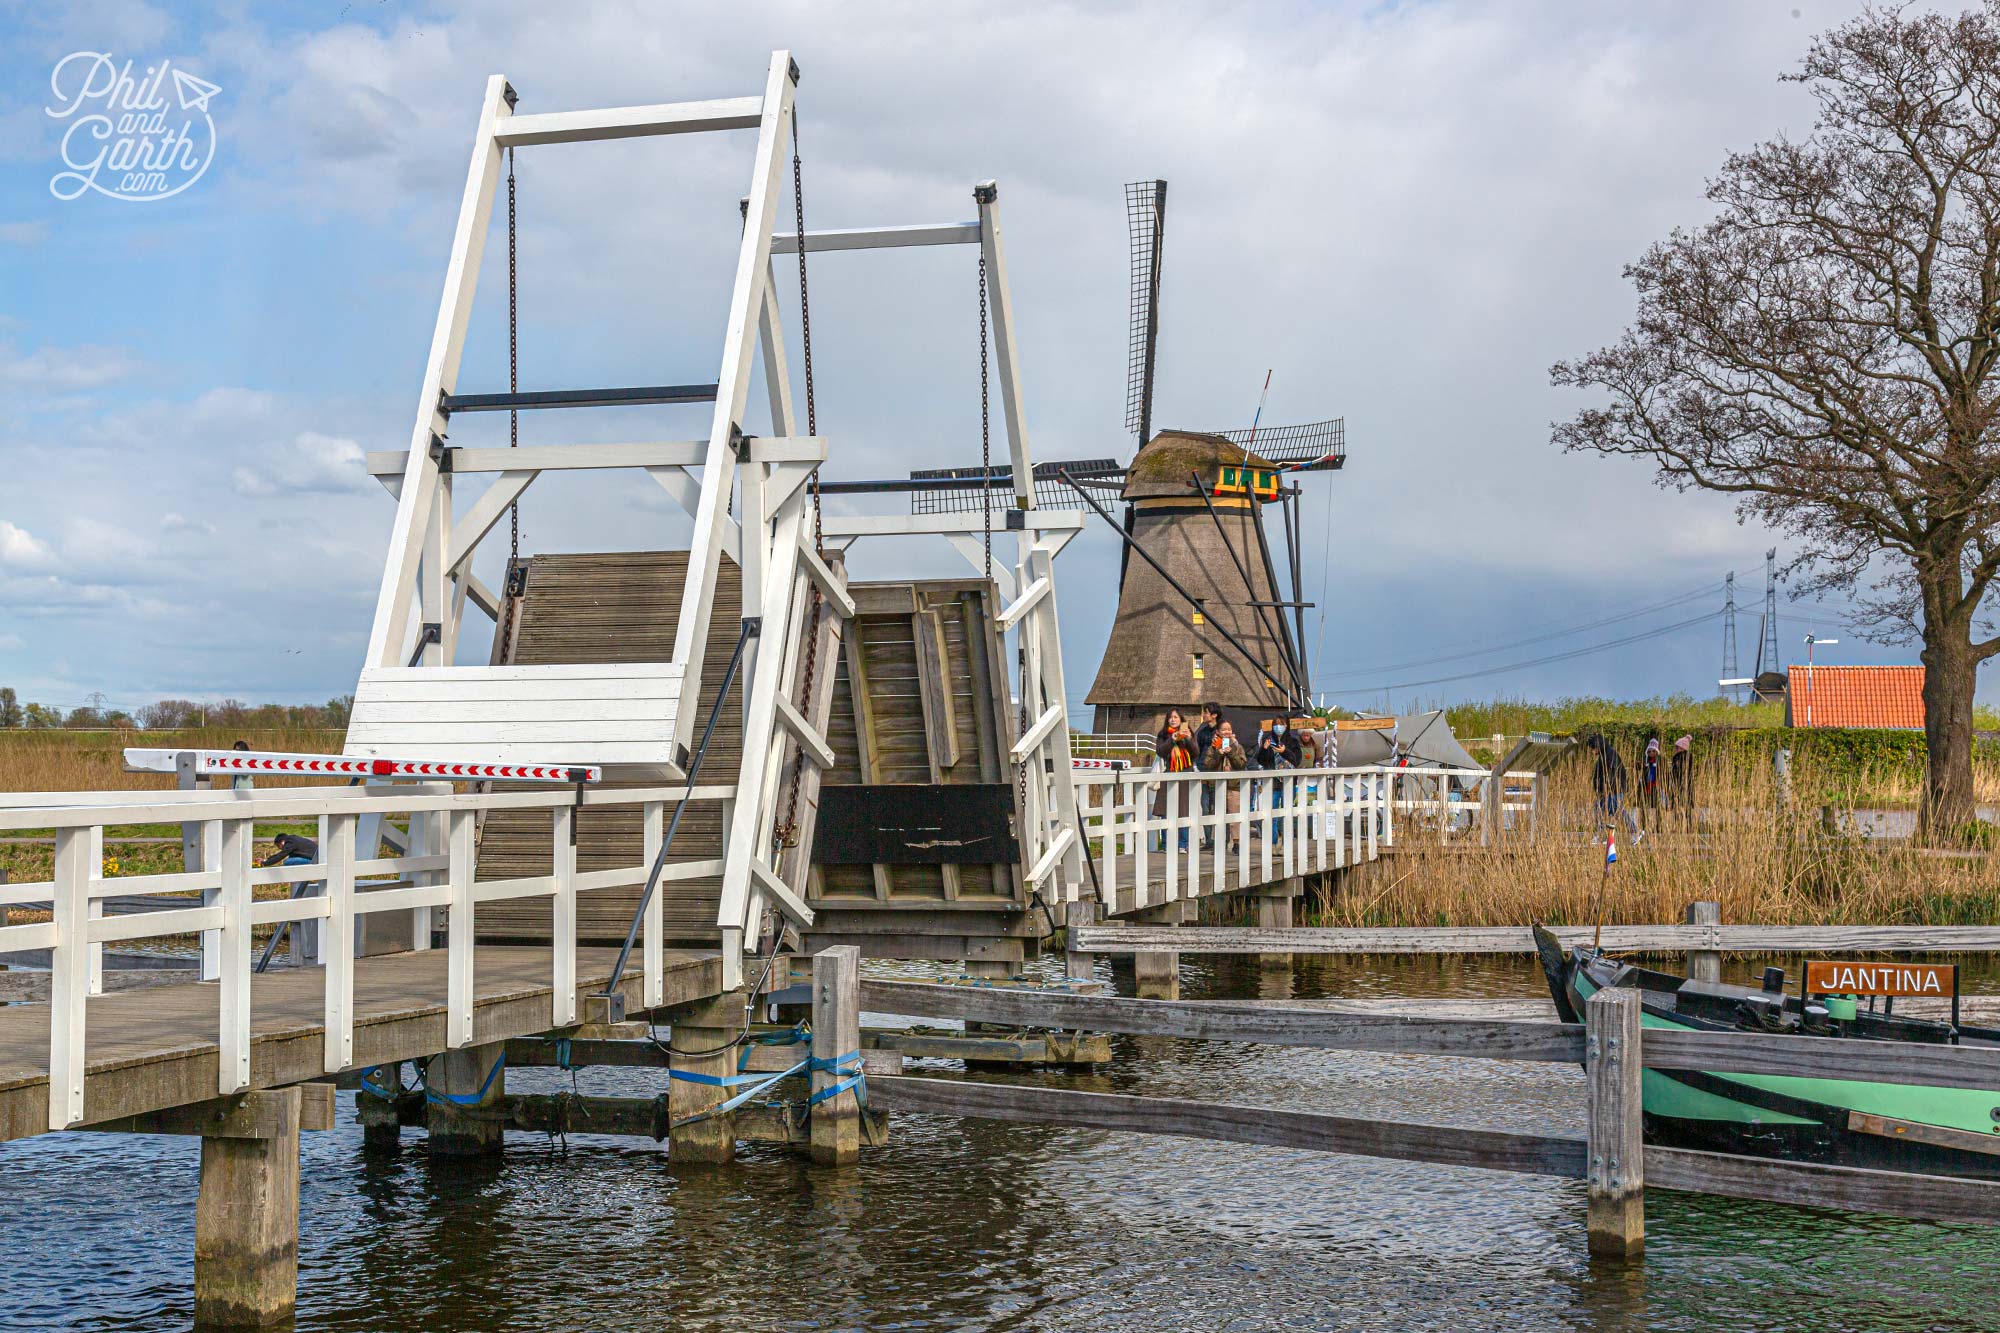 So many picturesque spots at Kinderdijk